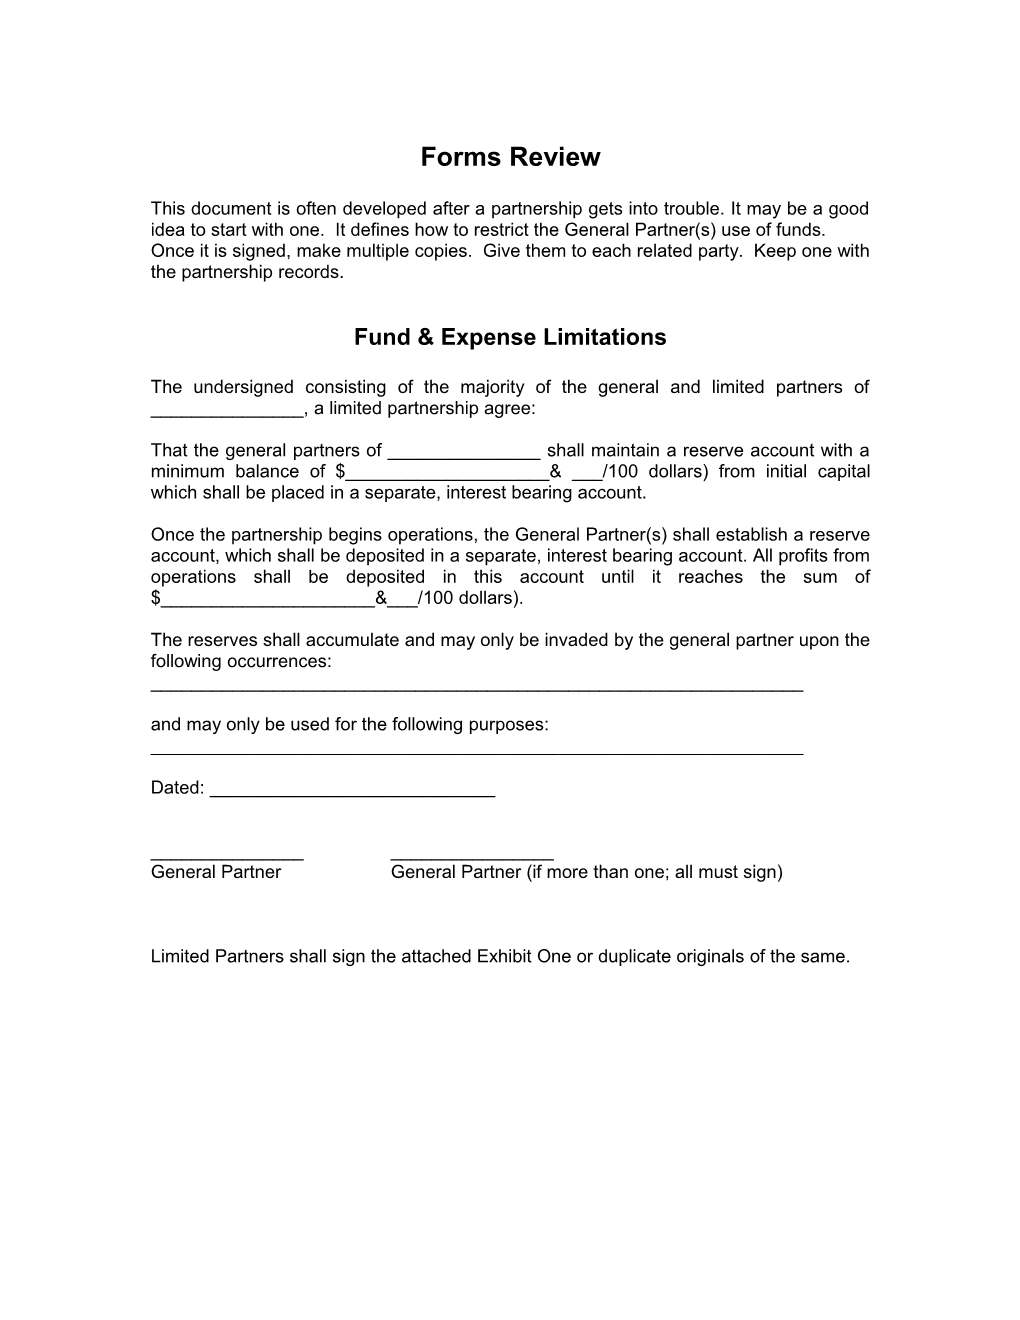 Fund & Expense Limitations